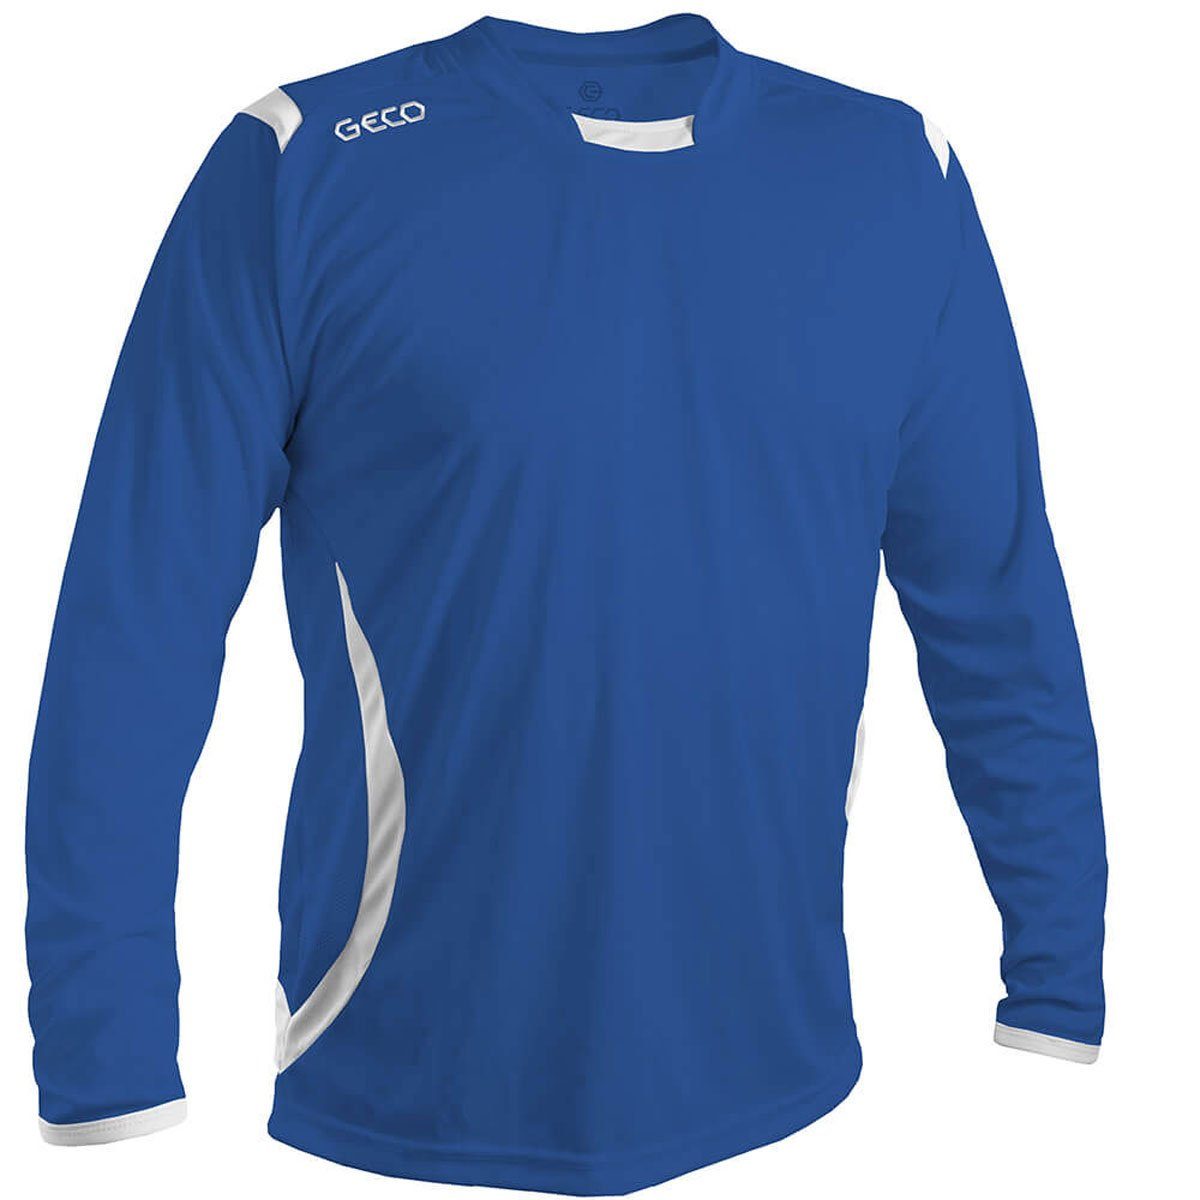 Geco Sportswear Fußballtrikot Geco blau/weiß Fußball Levante Trikot langarm zweifarbig